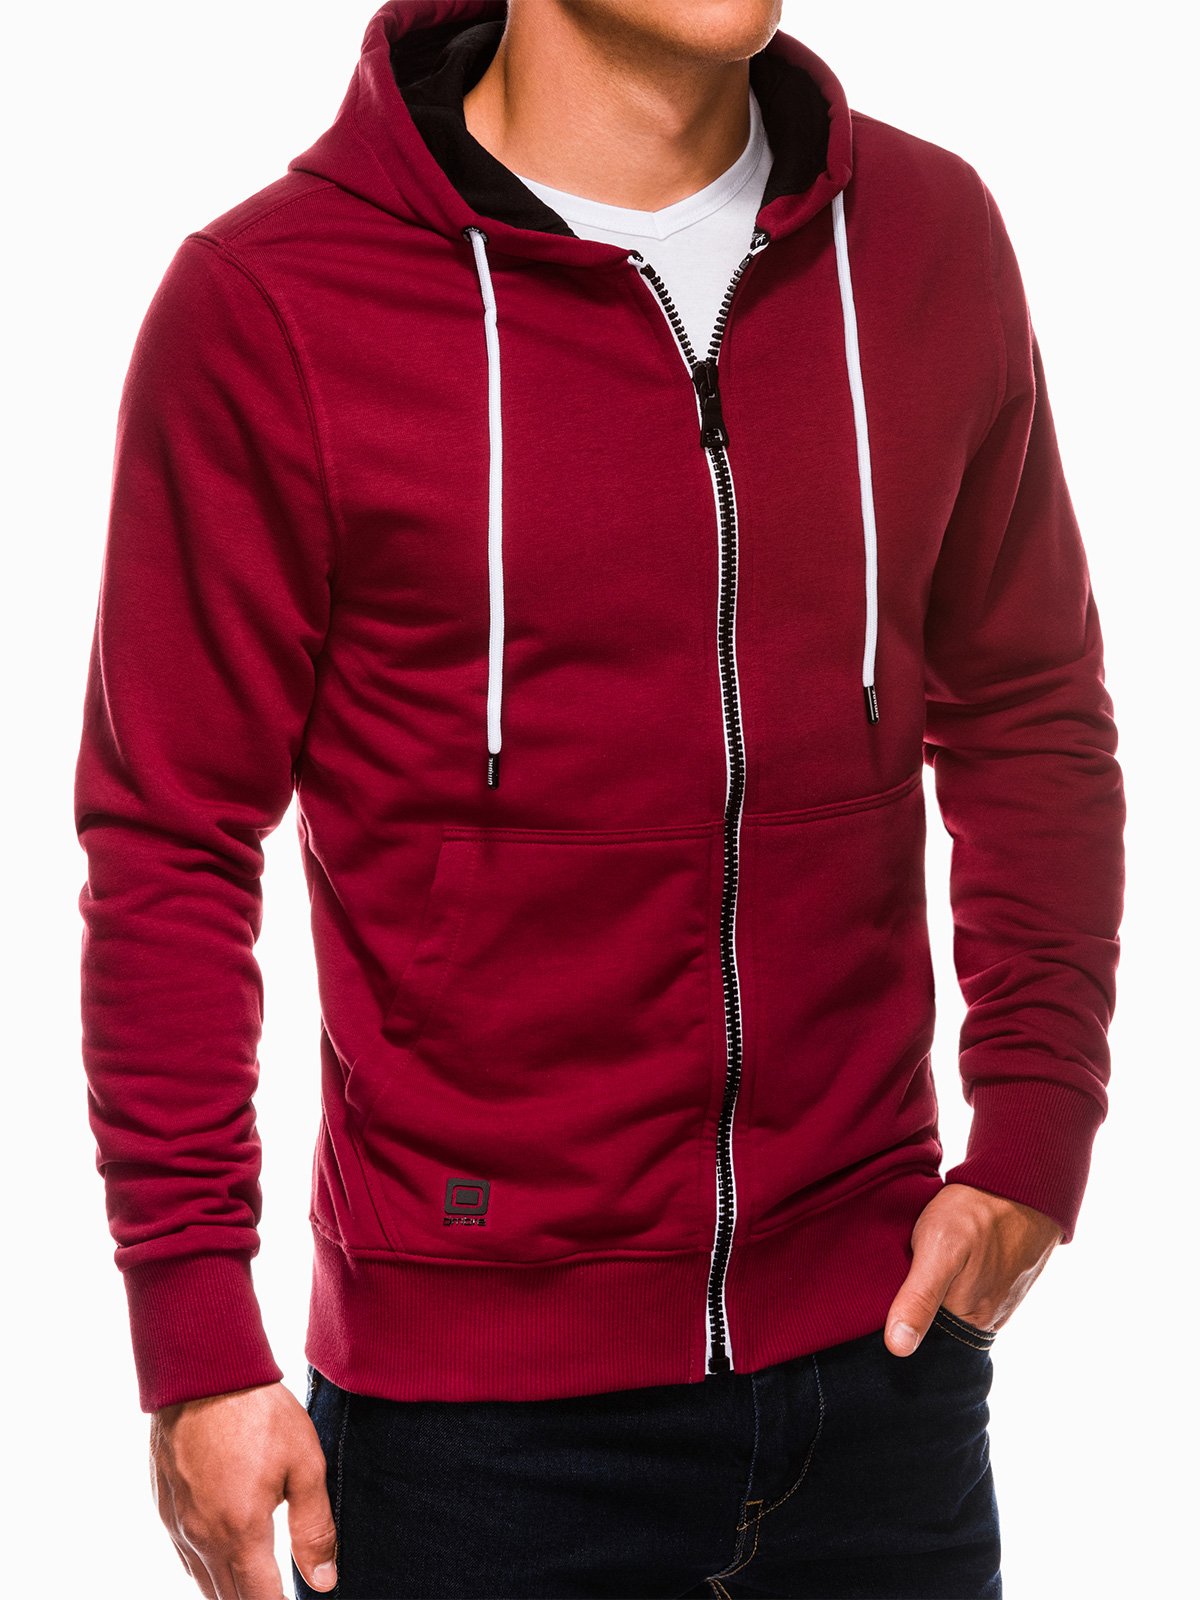 Men's zip-up sweatshirt B976 - dark red | MODONE wholesale - Clothing ...